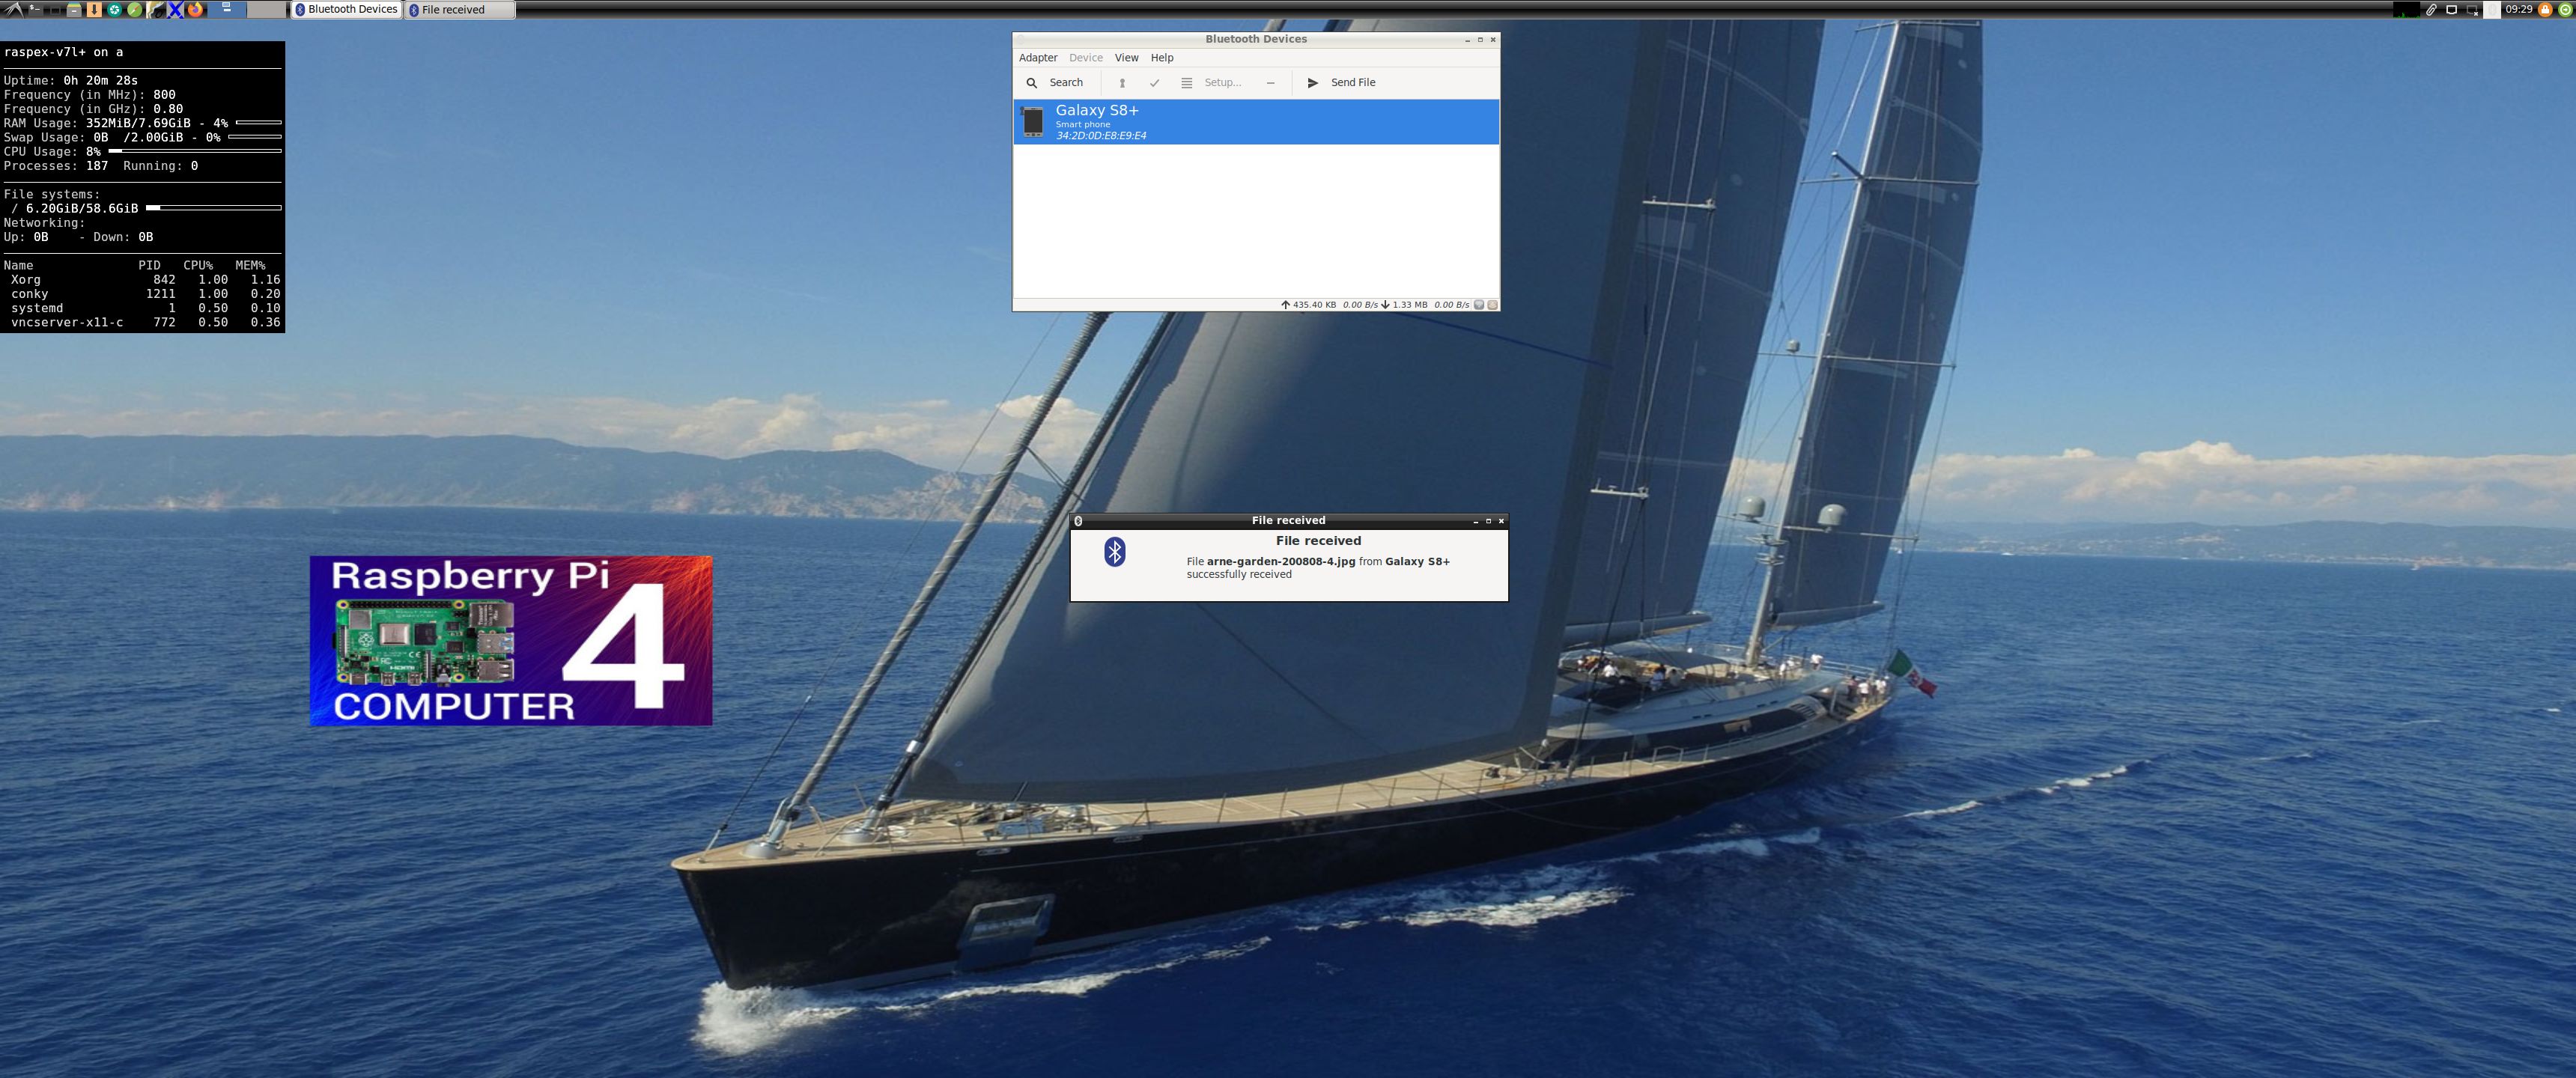 Sailaway - The Sailing Simulator Free Download Install